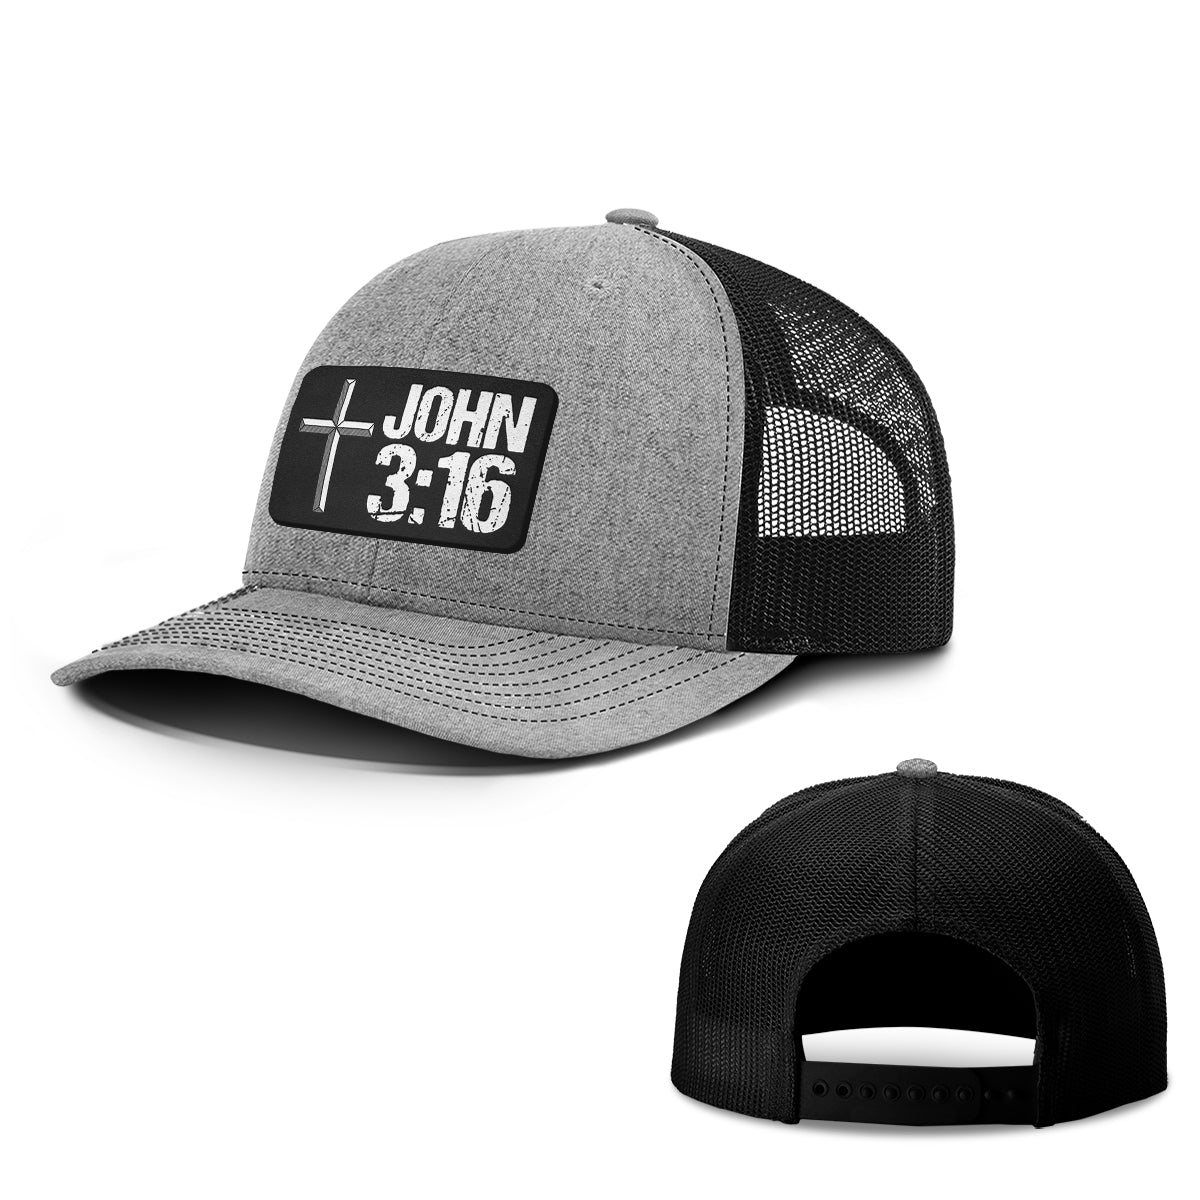 John 3:16 Patch Hats